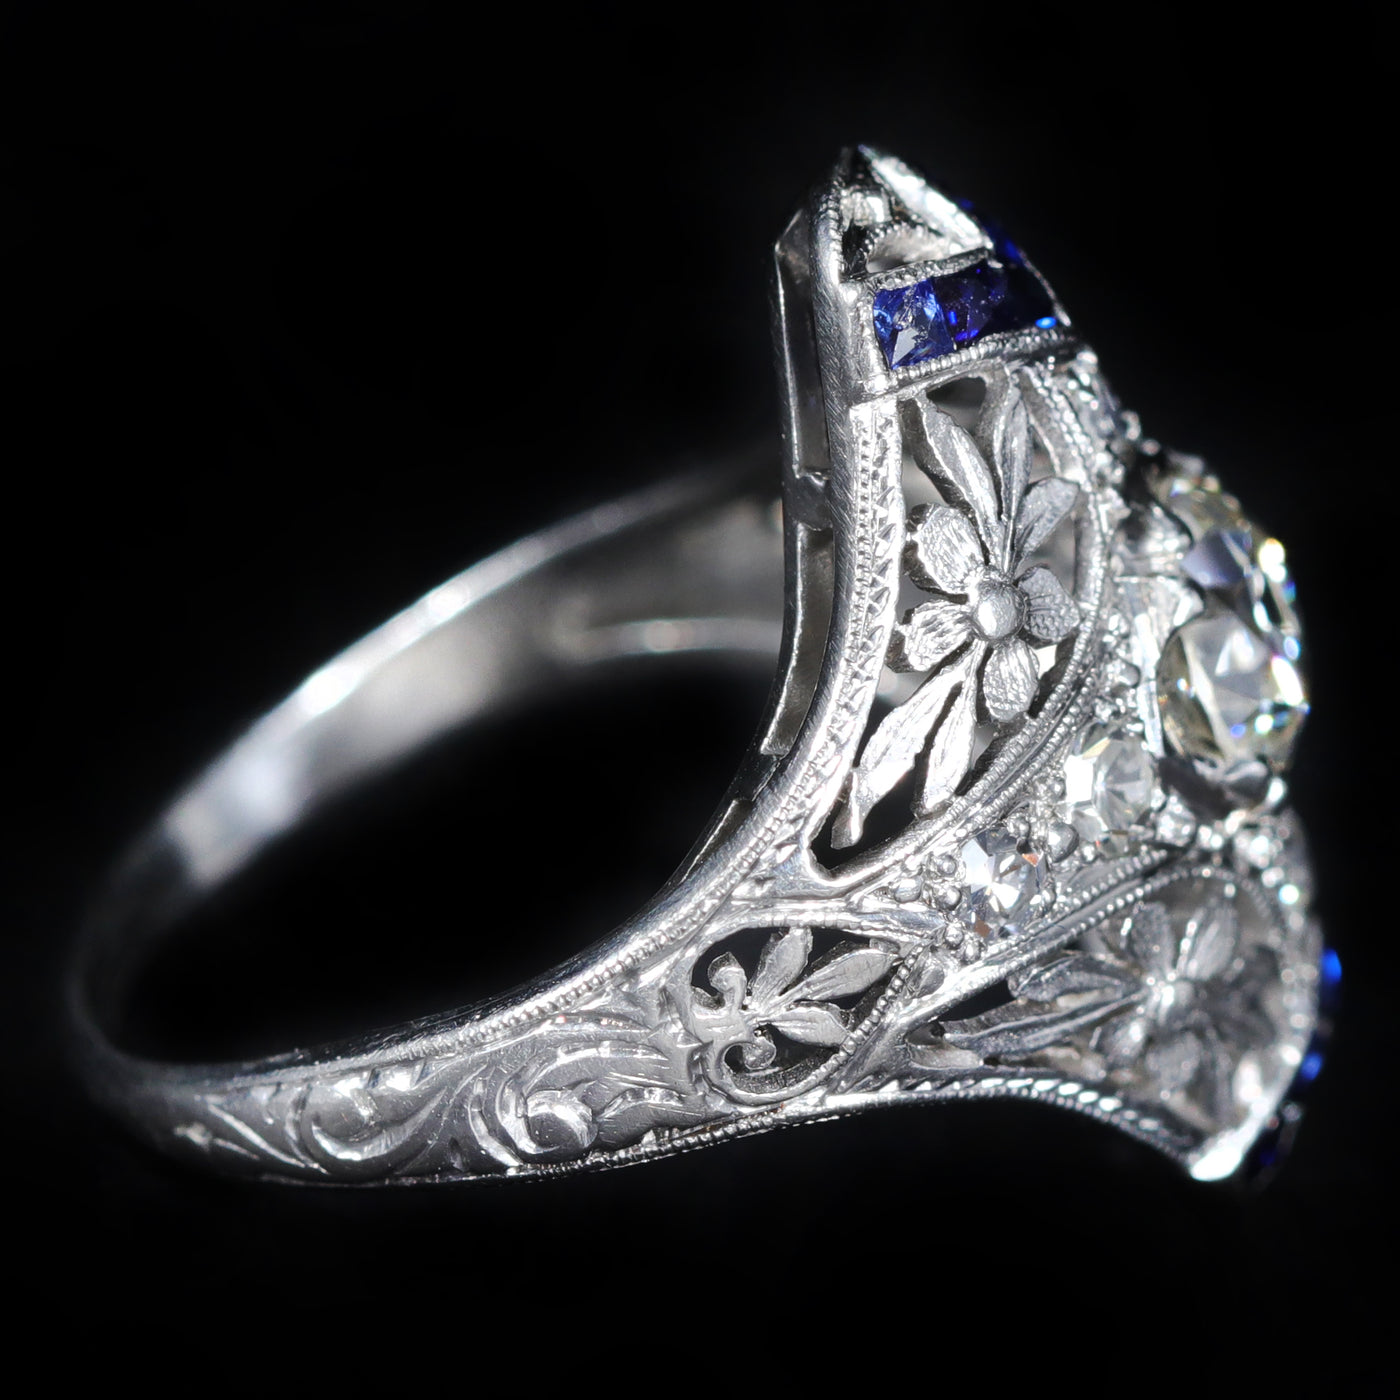 Art Deco GIA 0.73 Carat Old European Cut Diamond and Sapphire Ring